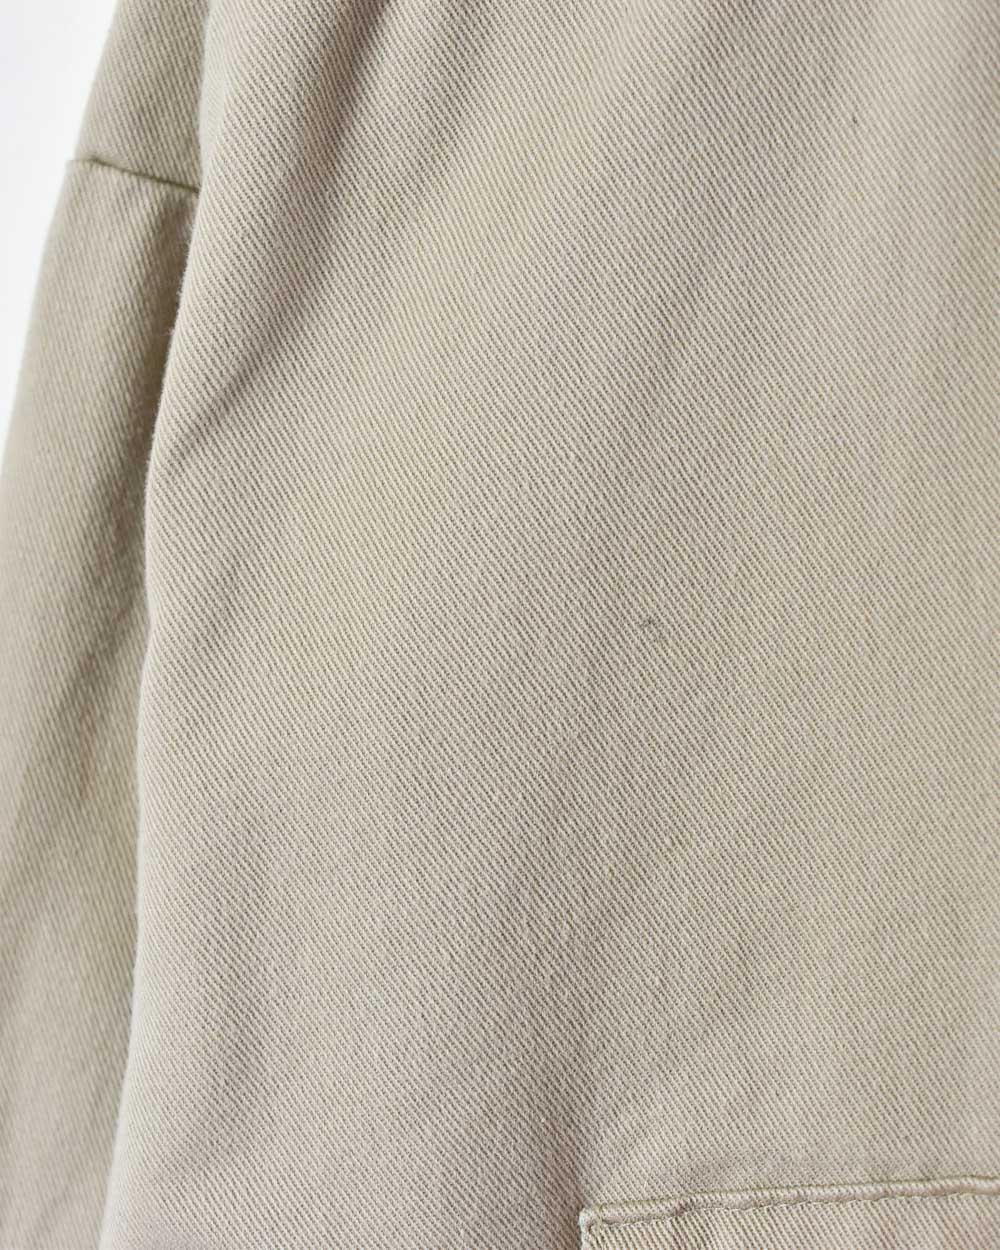 Neutral Dickies Workwear Overshirt - X-Large